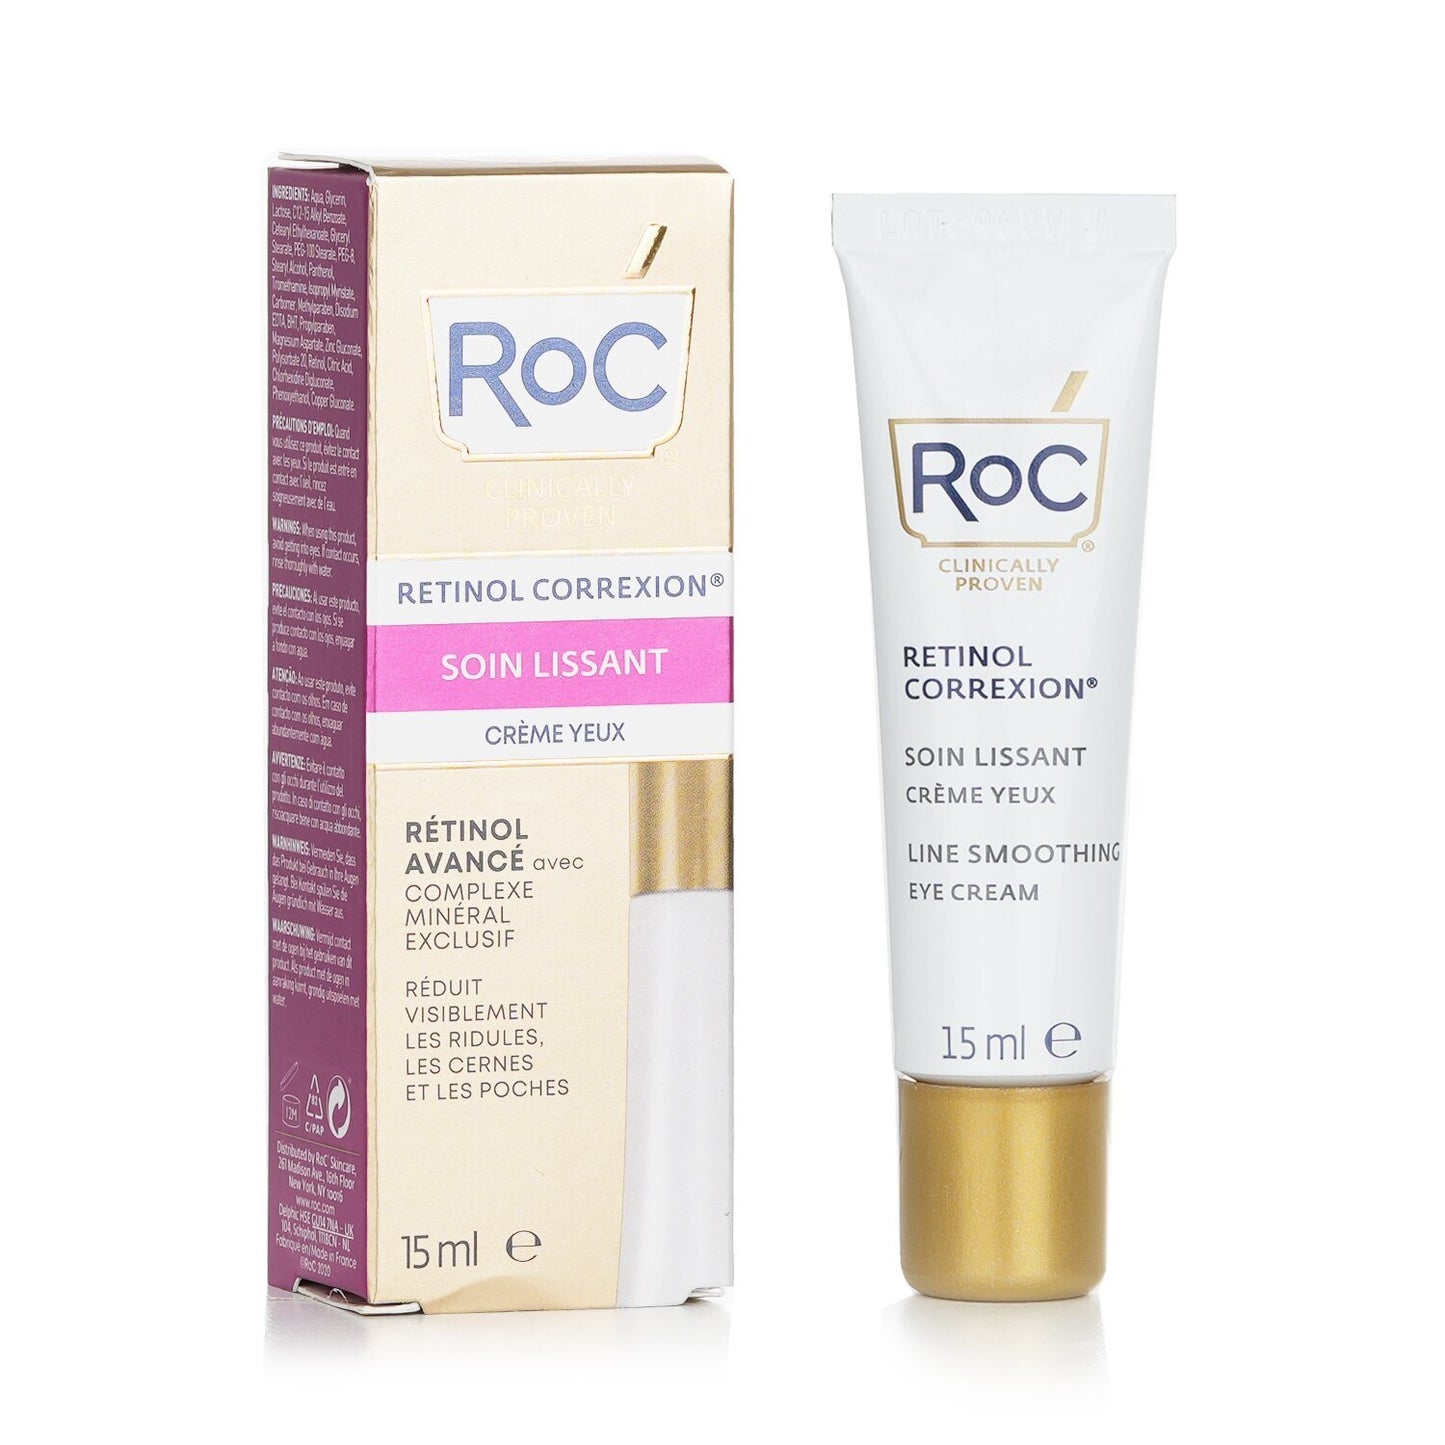 Retinol Correxion Line Smoothing Eye Cream - Advanced Retinol With Exclusive Mineral Complex